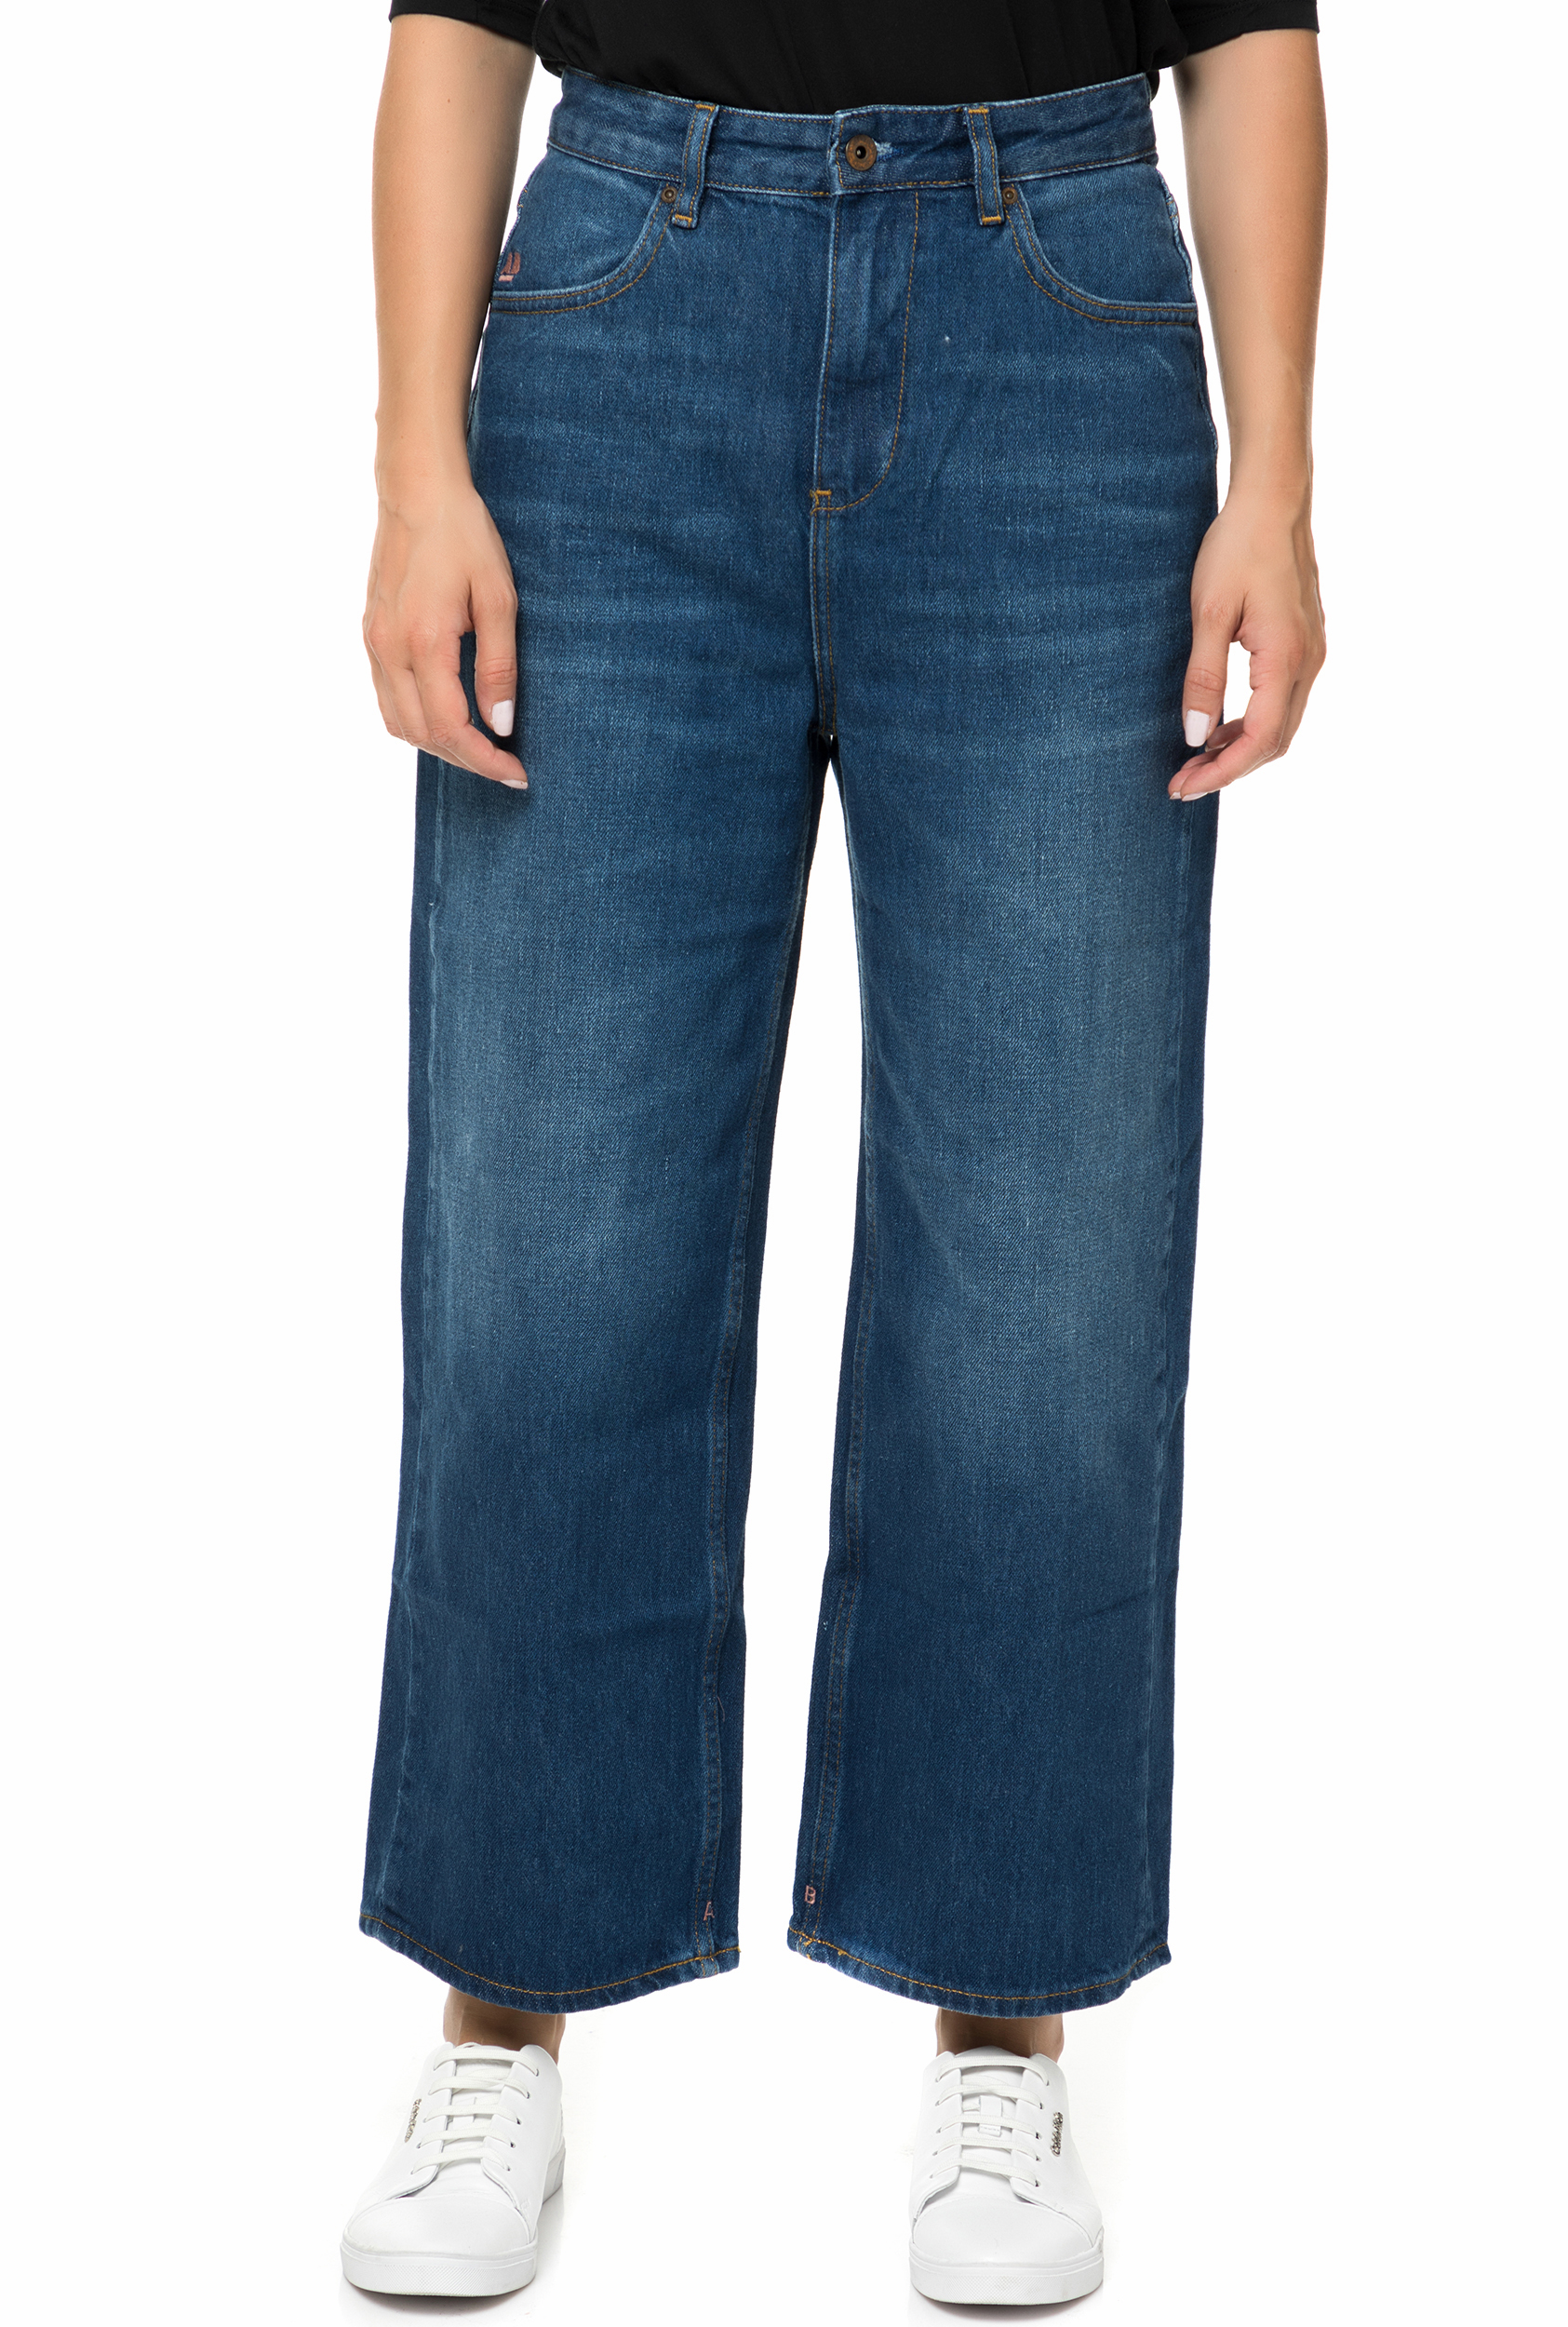 SCOTCH & SODA - Γυναικεία τζιν ψηλόμεση crop παντελόνα SCOTCH & SODA μπλε Γυναικεία/Ρούχα/Παντελόνια/Cropped